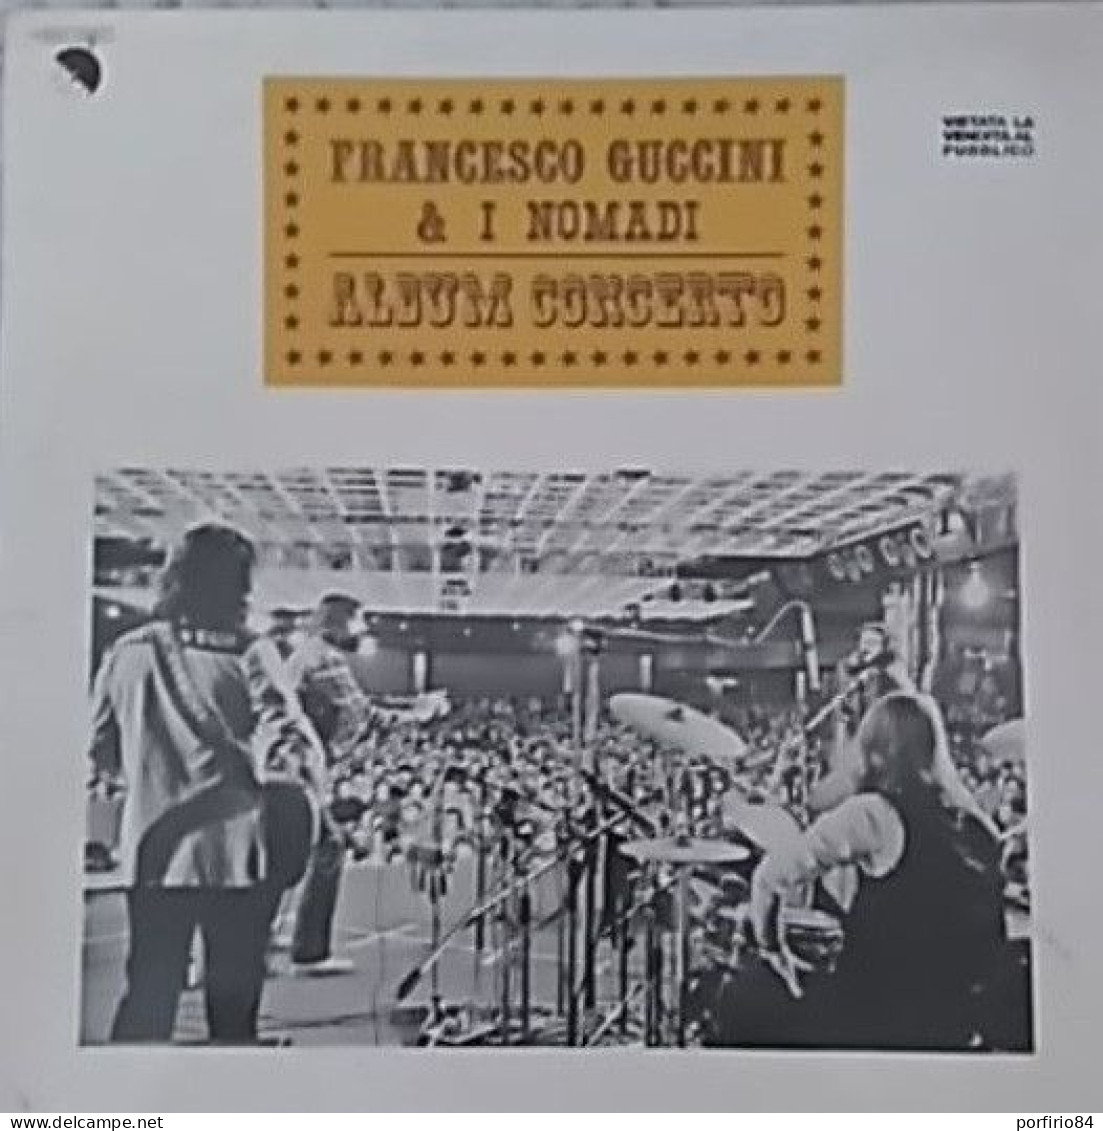 FRANCESCO GUCCINI & I NOMADI ALBUM CONCERTO LP 33 GIRI PROMO DEL 1979 - Other - Italian Music